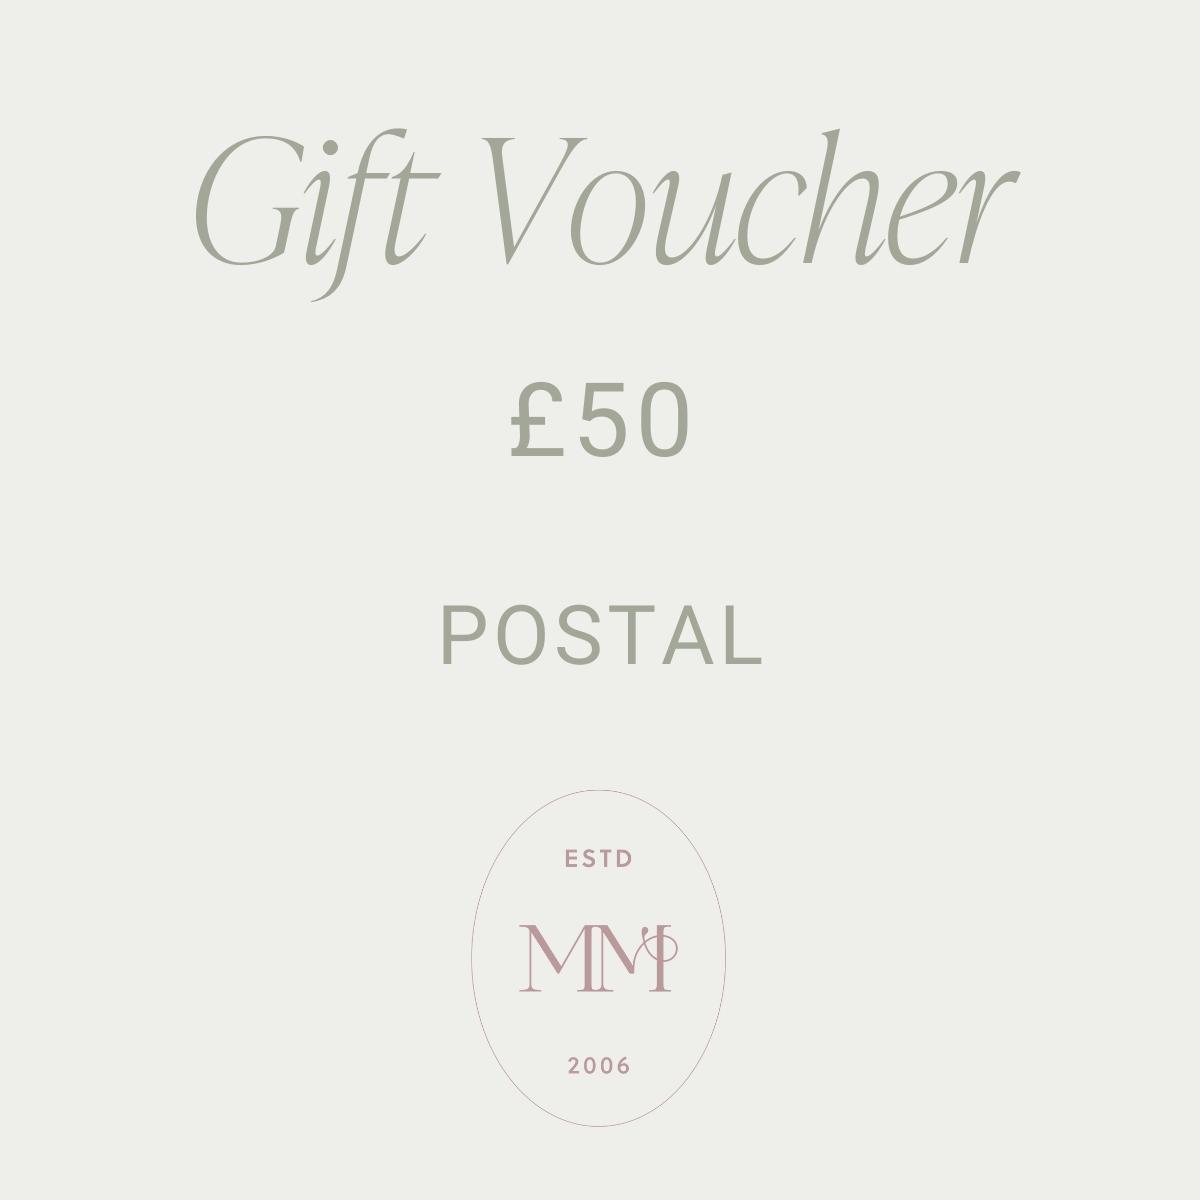 Gift Voucher £50.00 : POSTAL